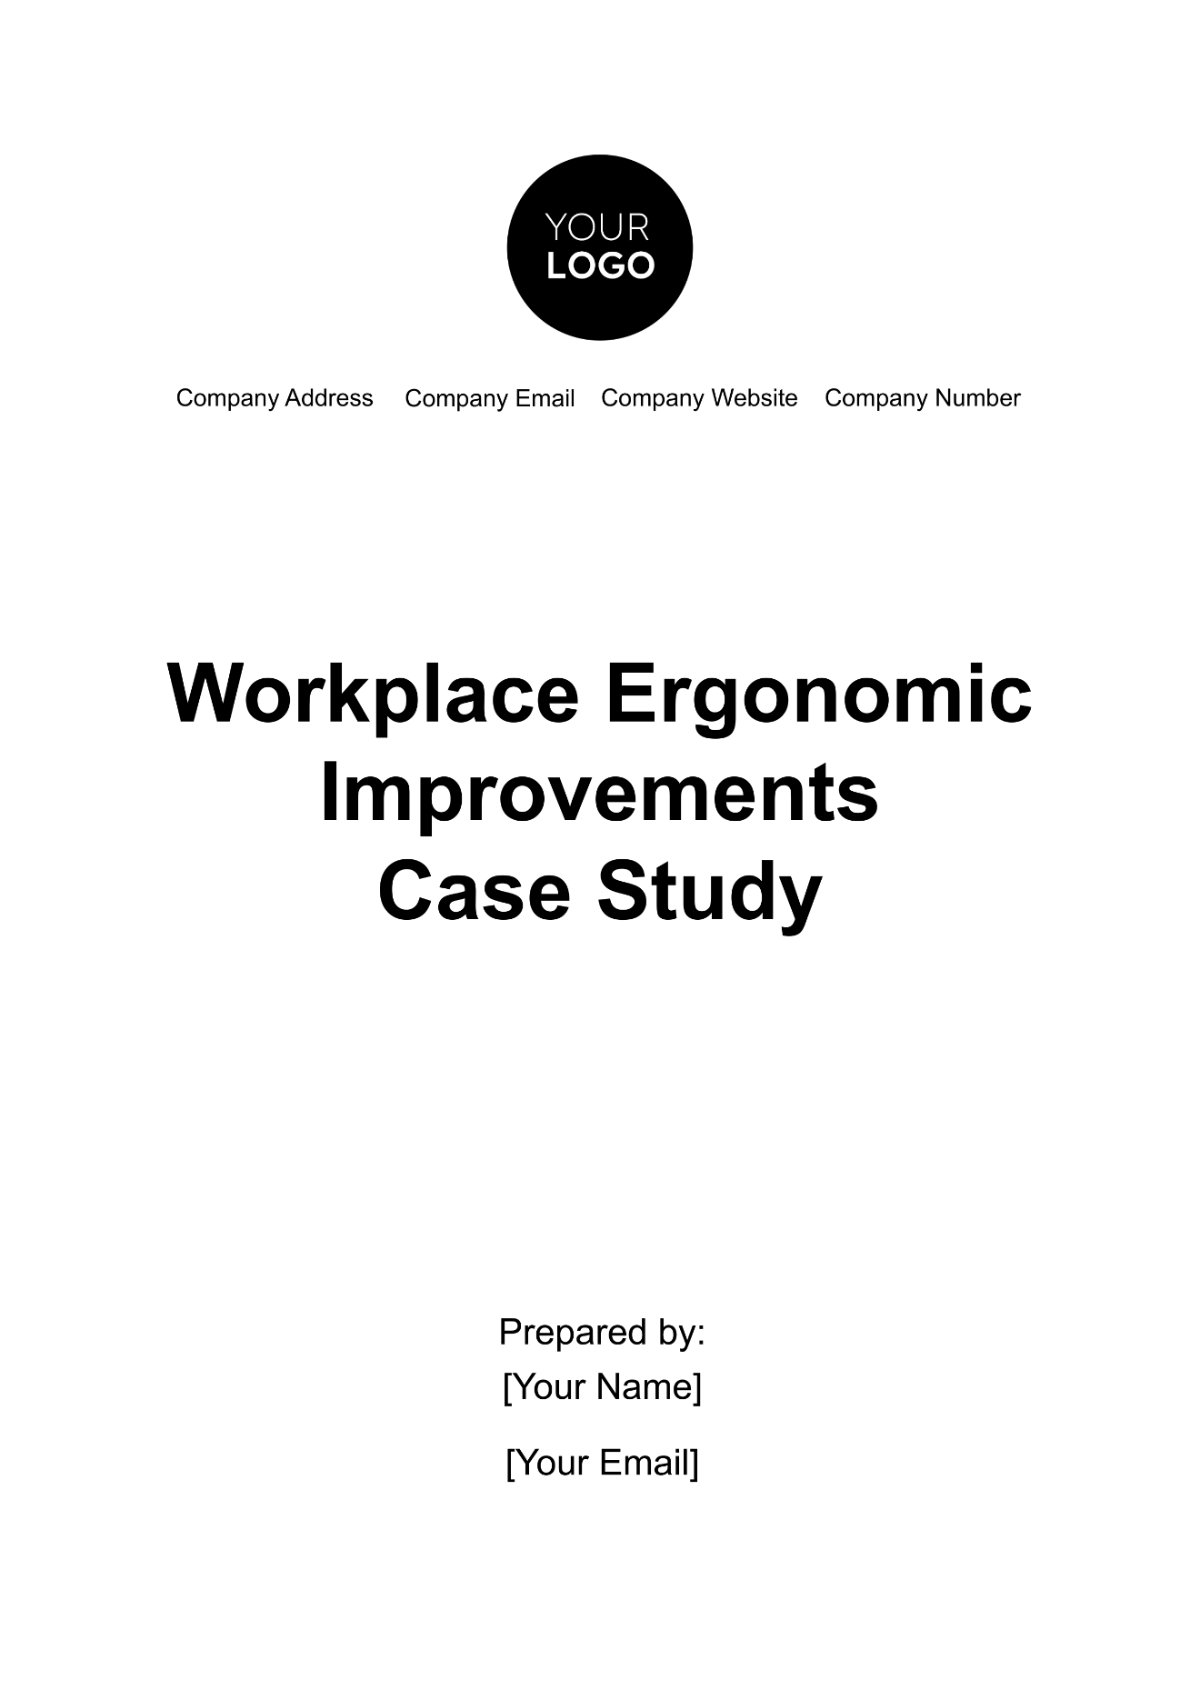 Workplace Ergonomic Improvements Case Study Template